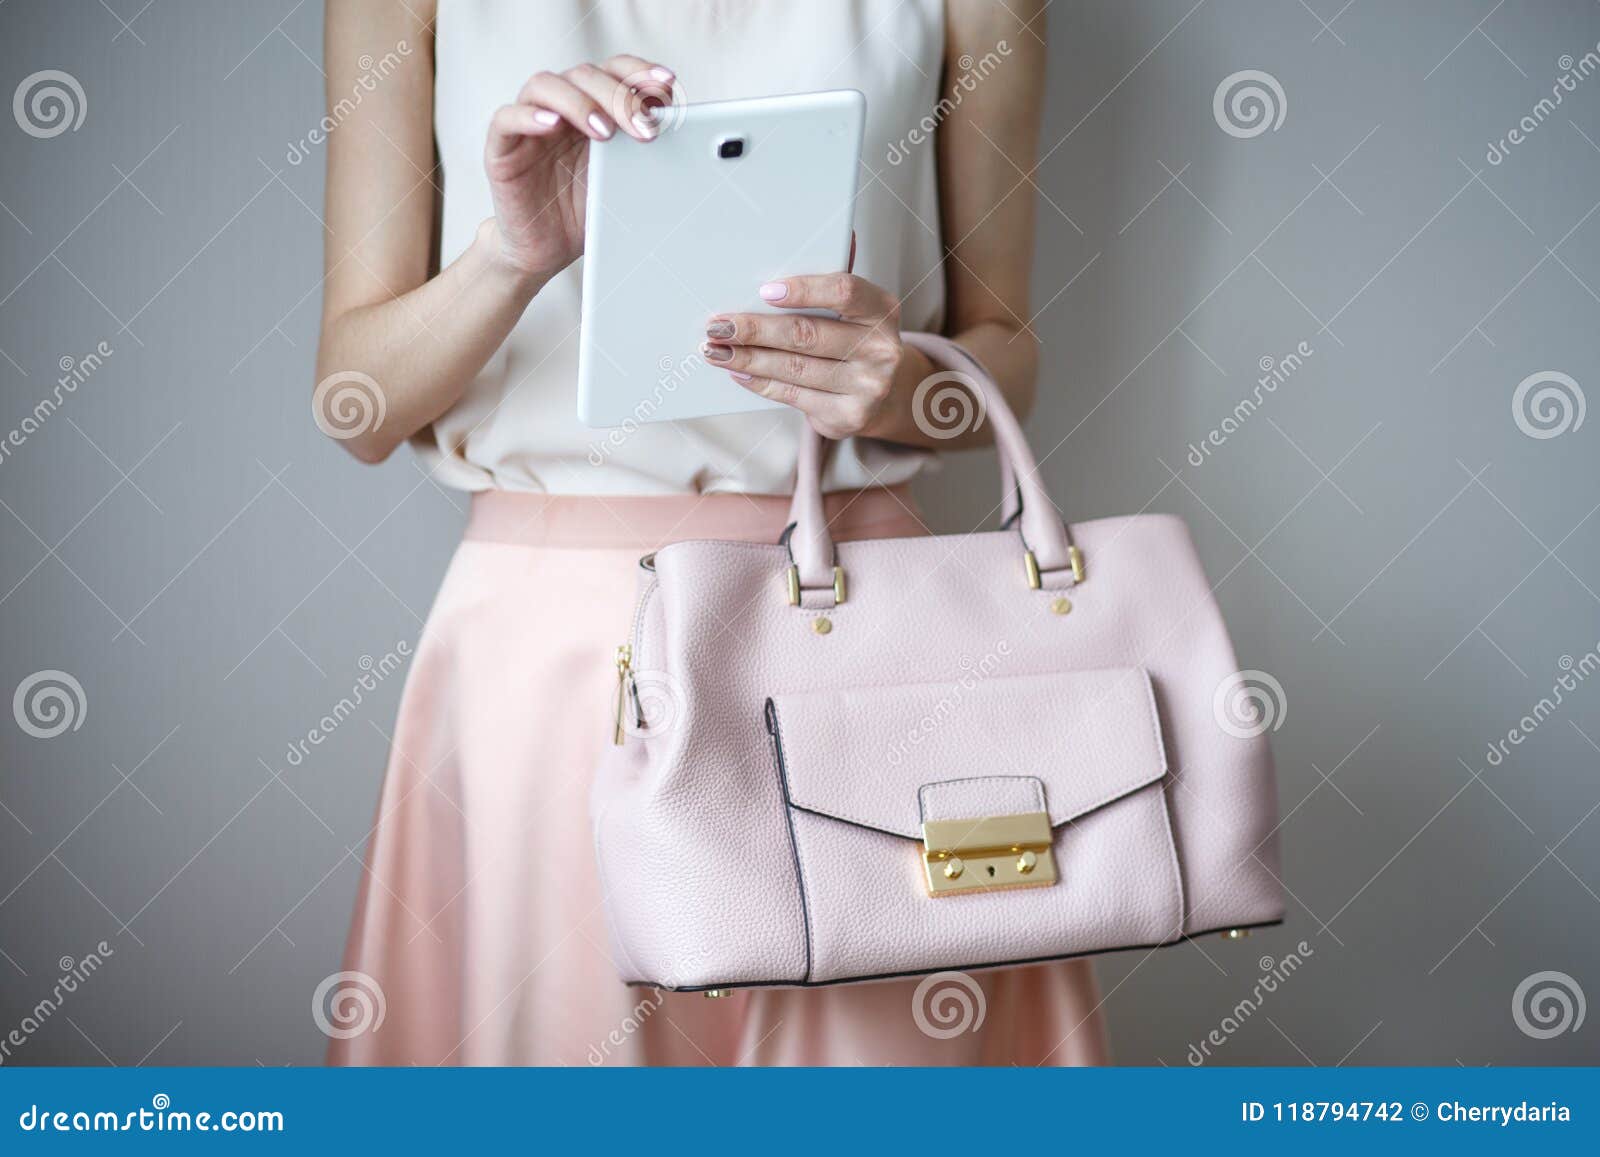 digital electronic tablet on a woman`s hands. leather light pink handbag, summer elegant style